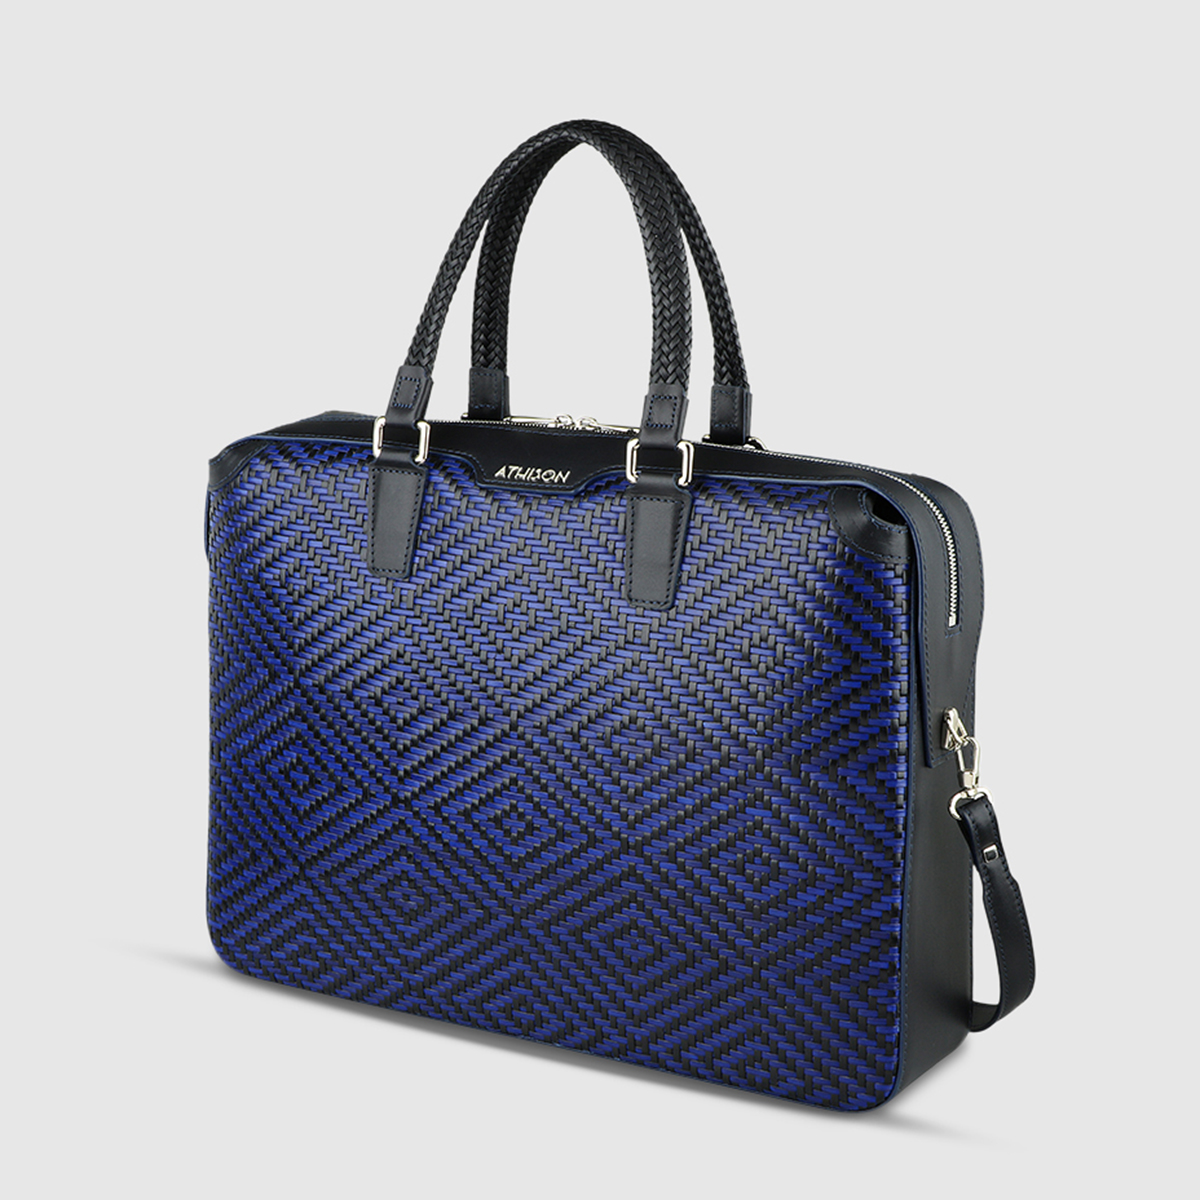 Athison Blue/Black Leather Bag Athison on sale 2022 3